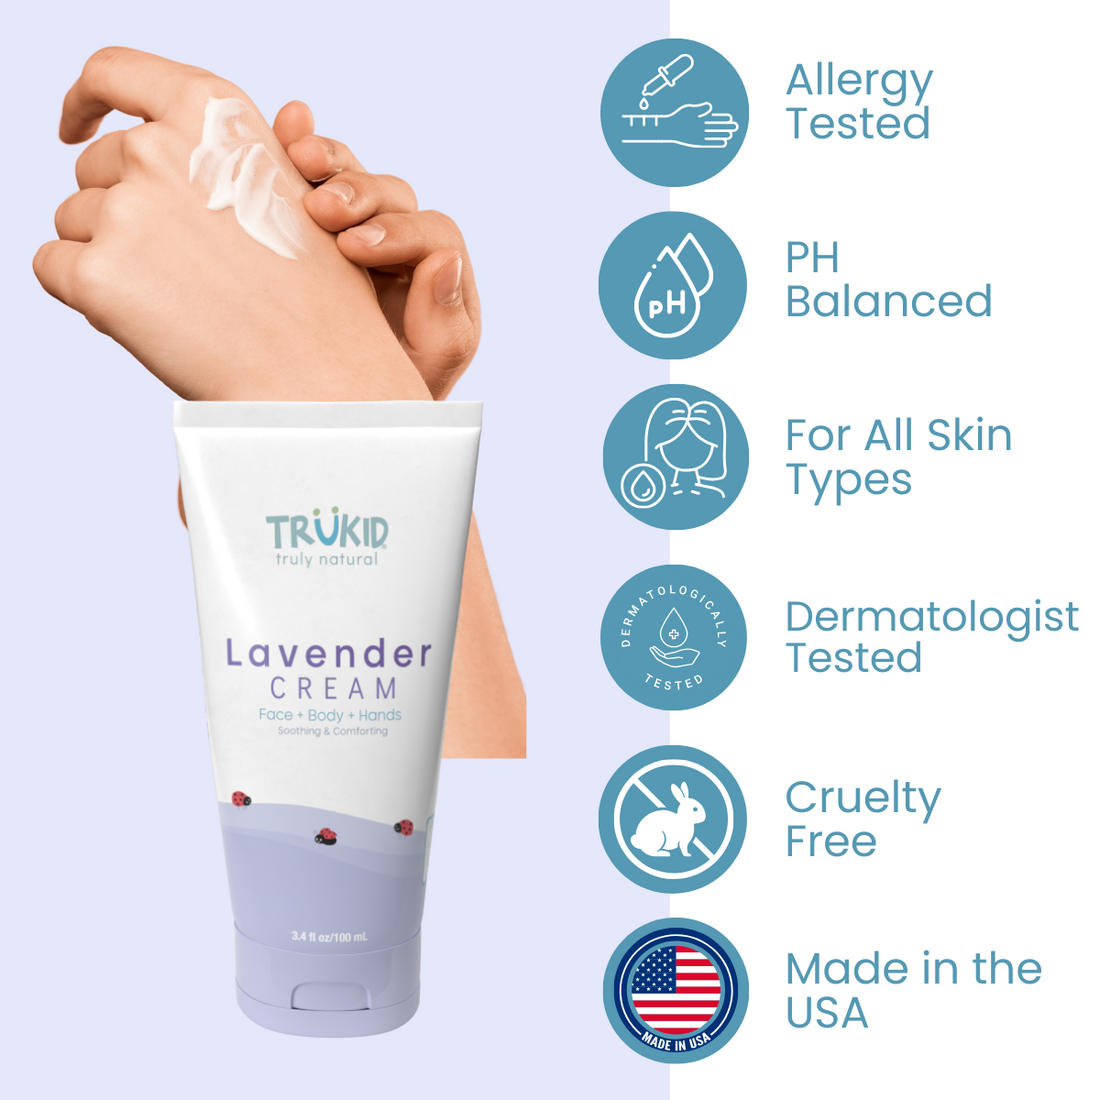 TruKid-Lavender-Cream benefits